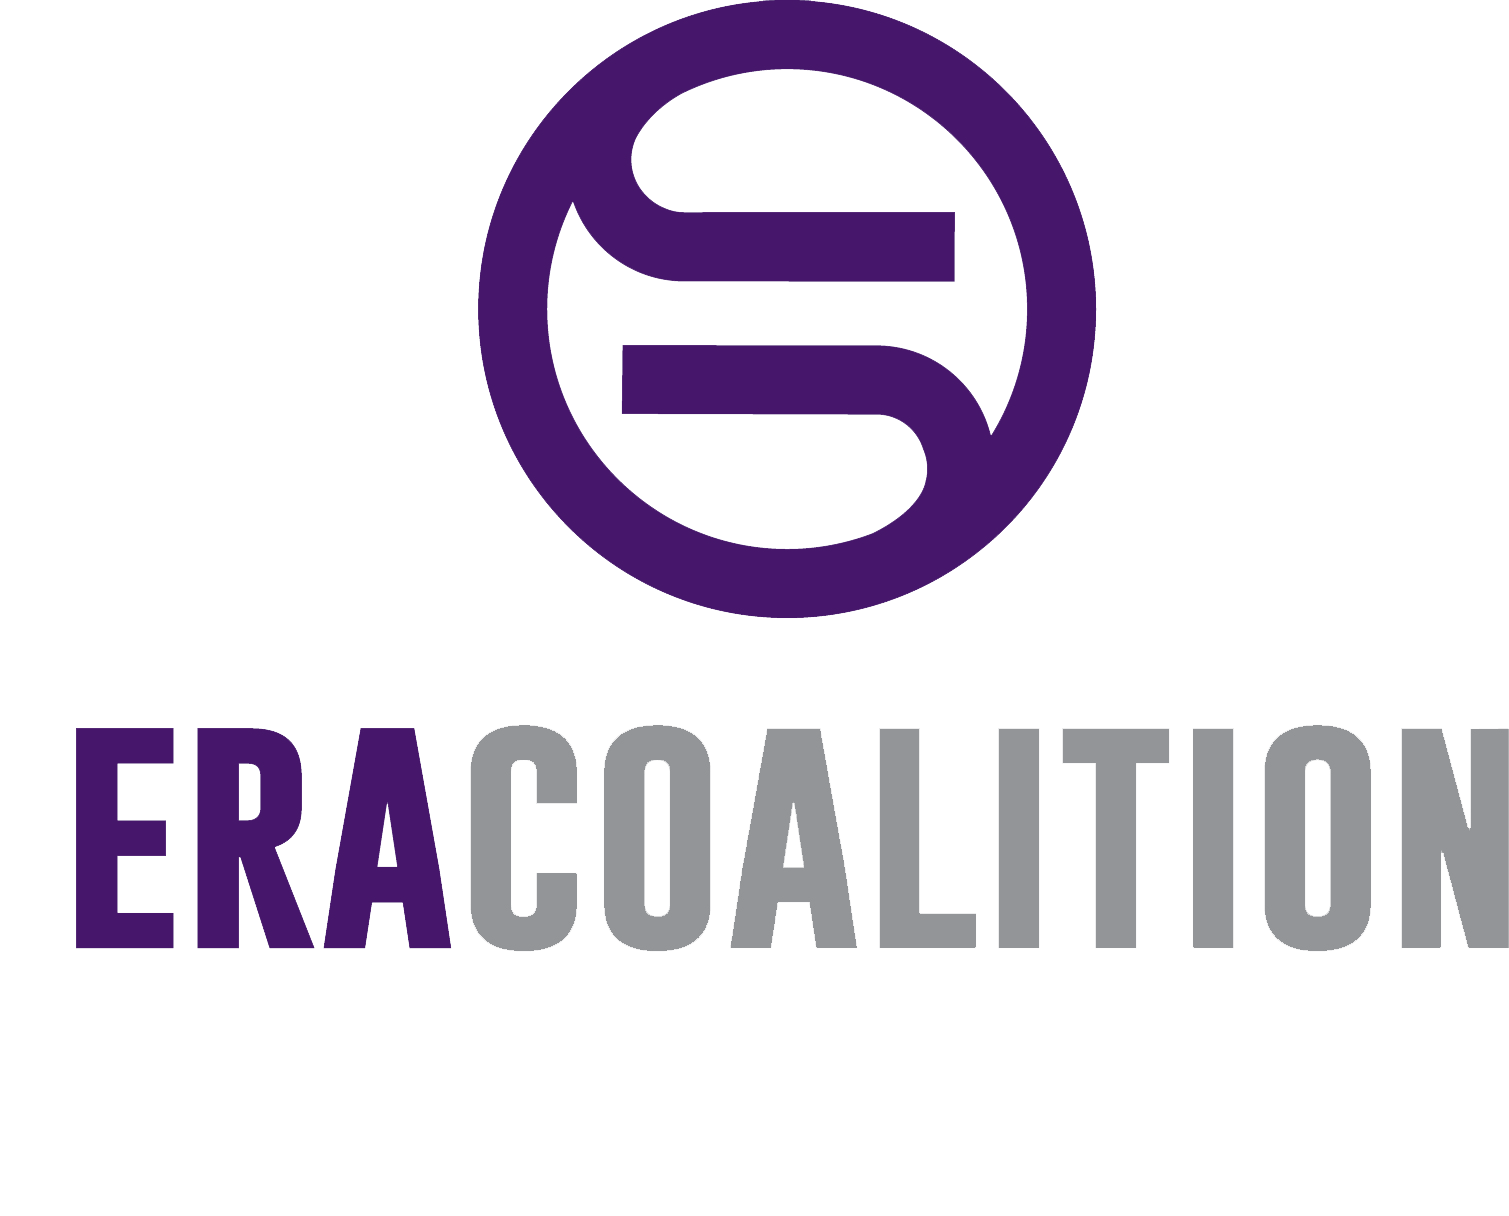 ERA Coalition logo